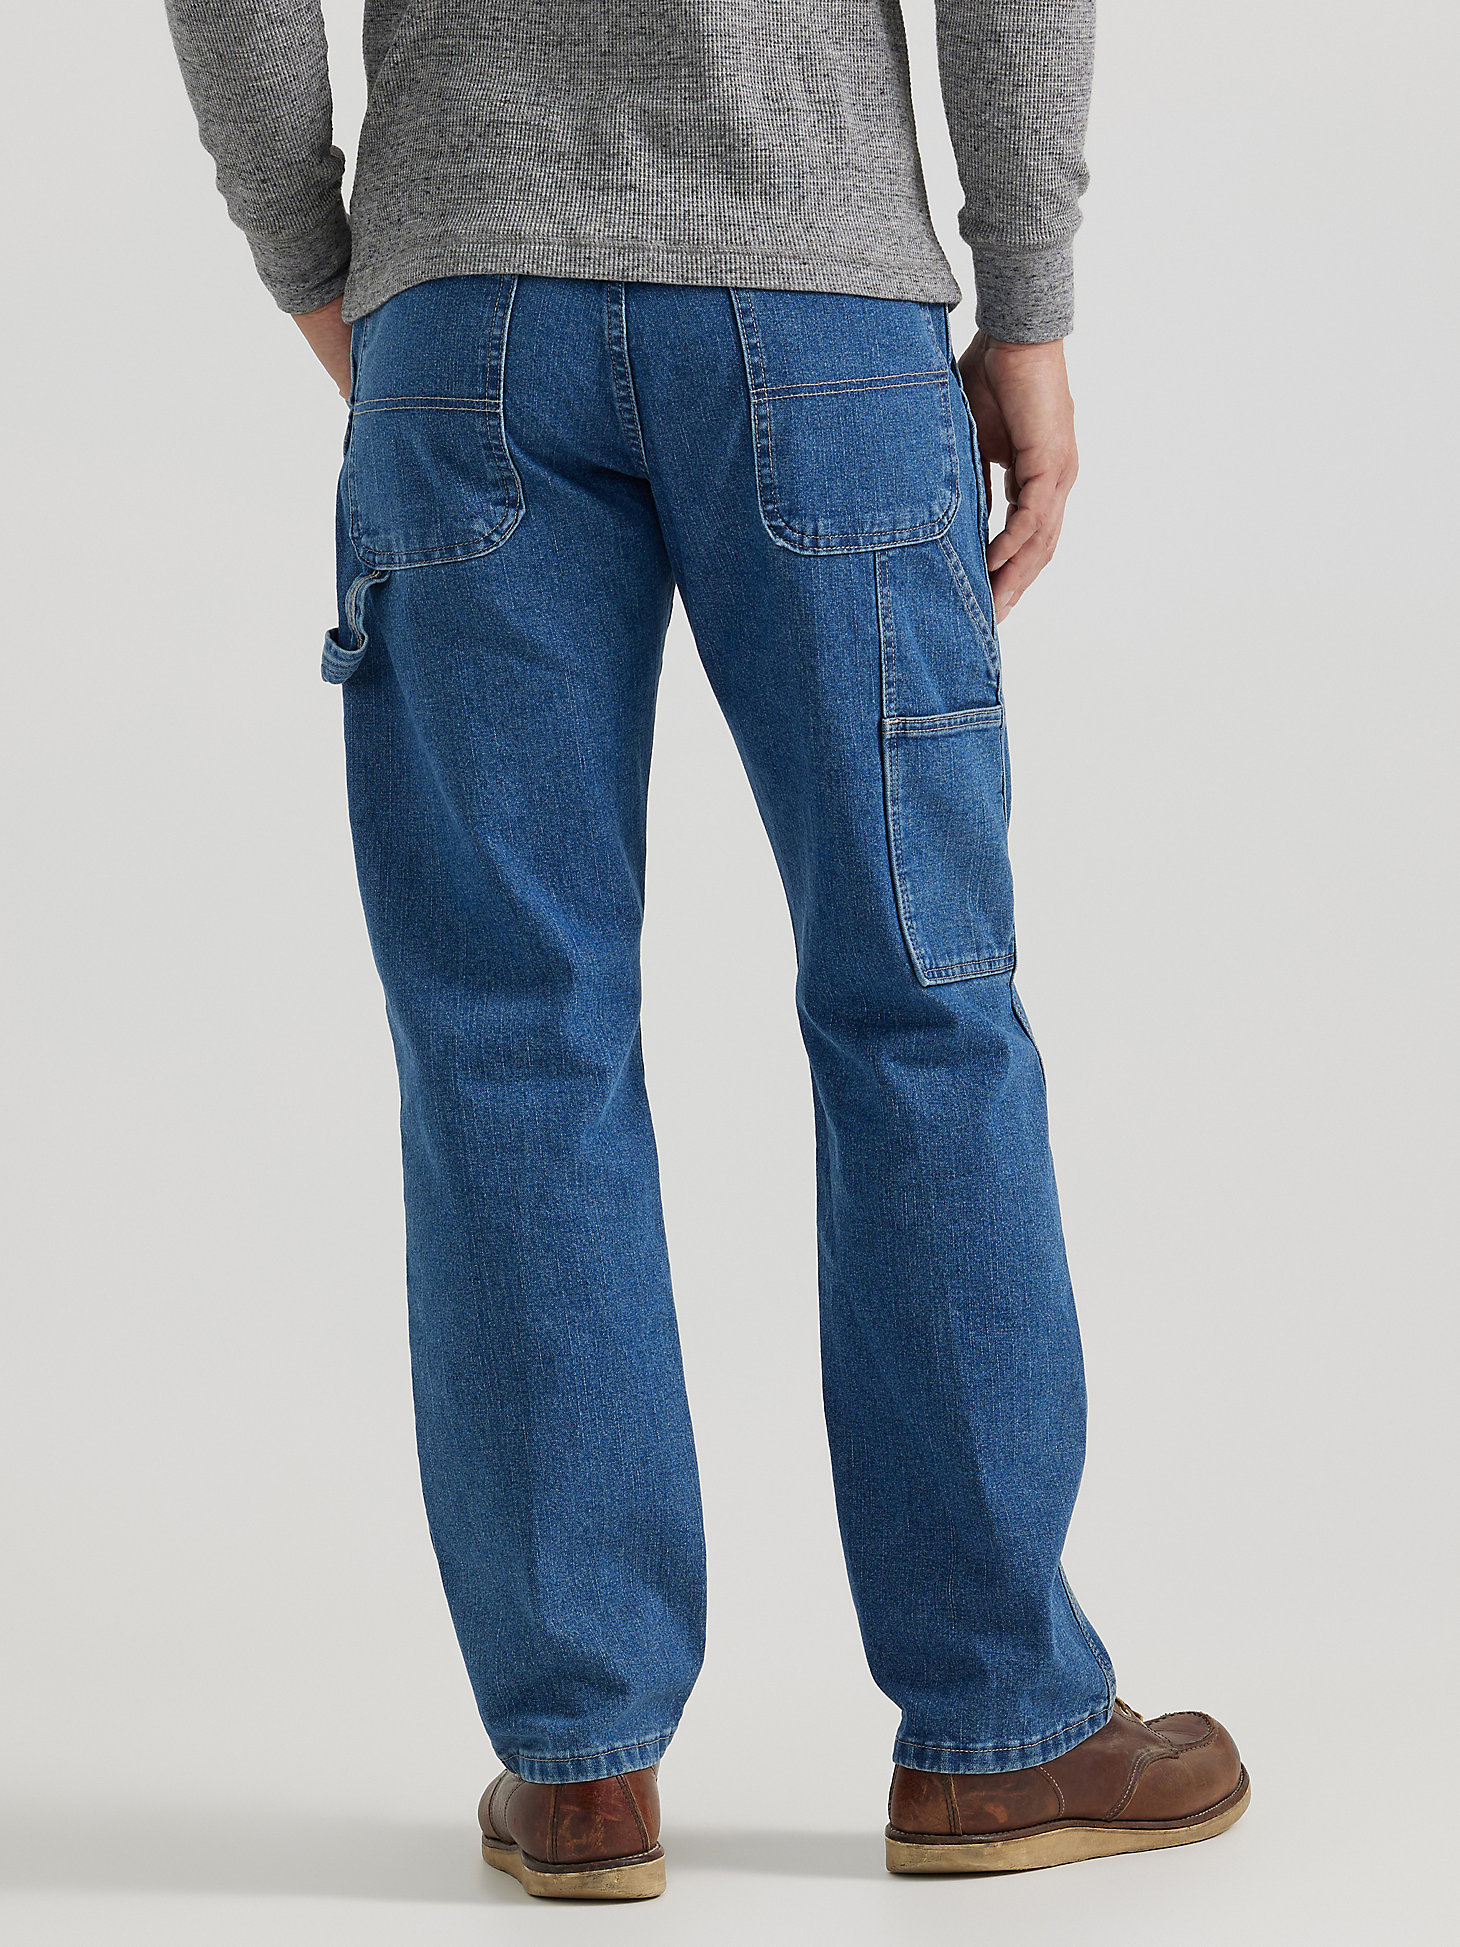 Wrangler® Men's Five Star Premium Carpenter Jean in Mid Indigo alternative view 1